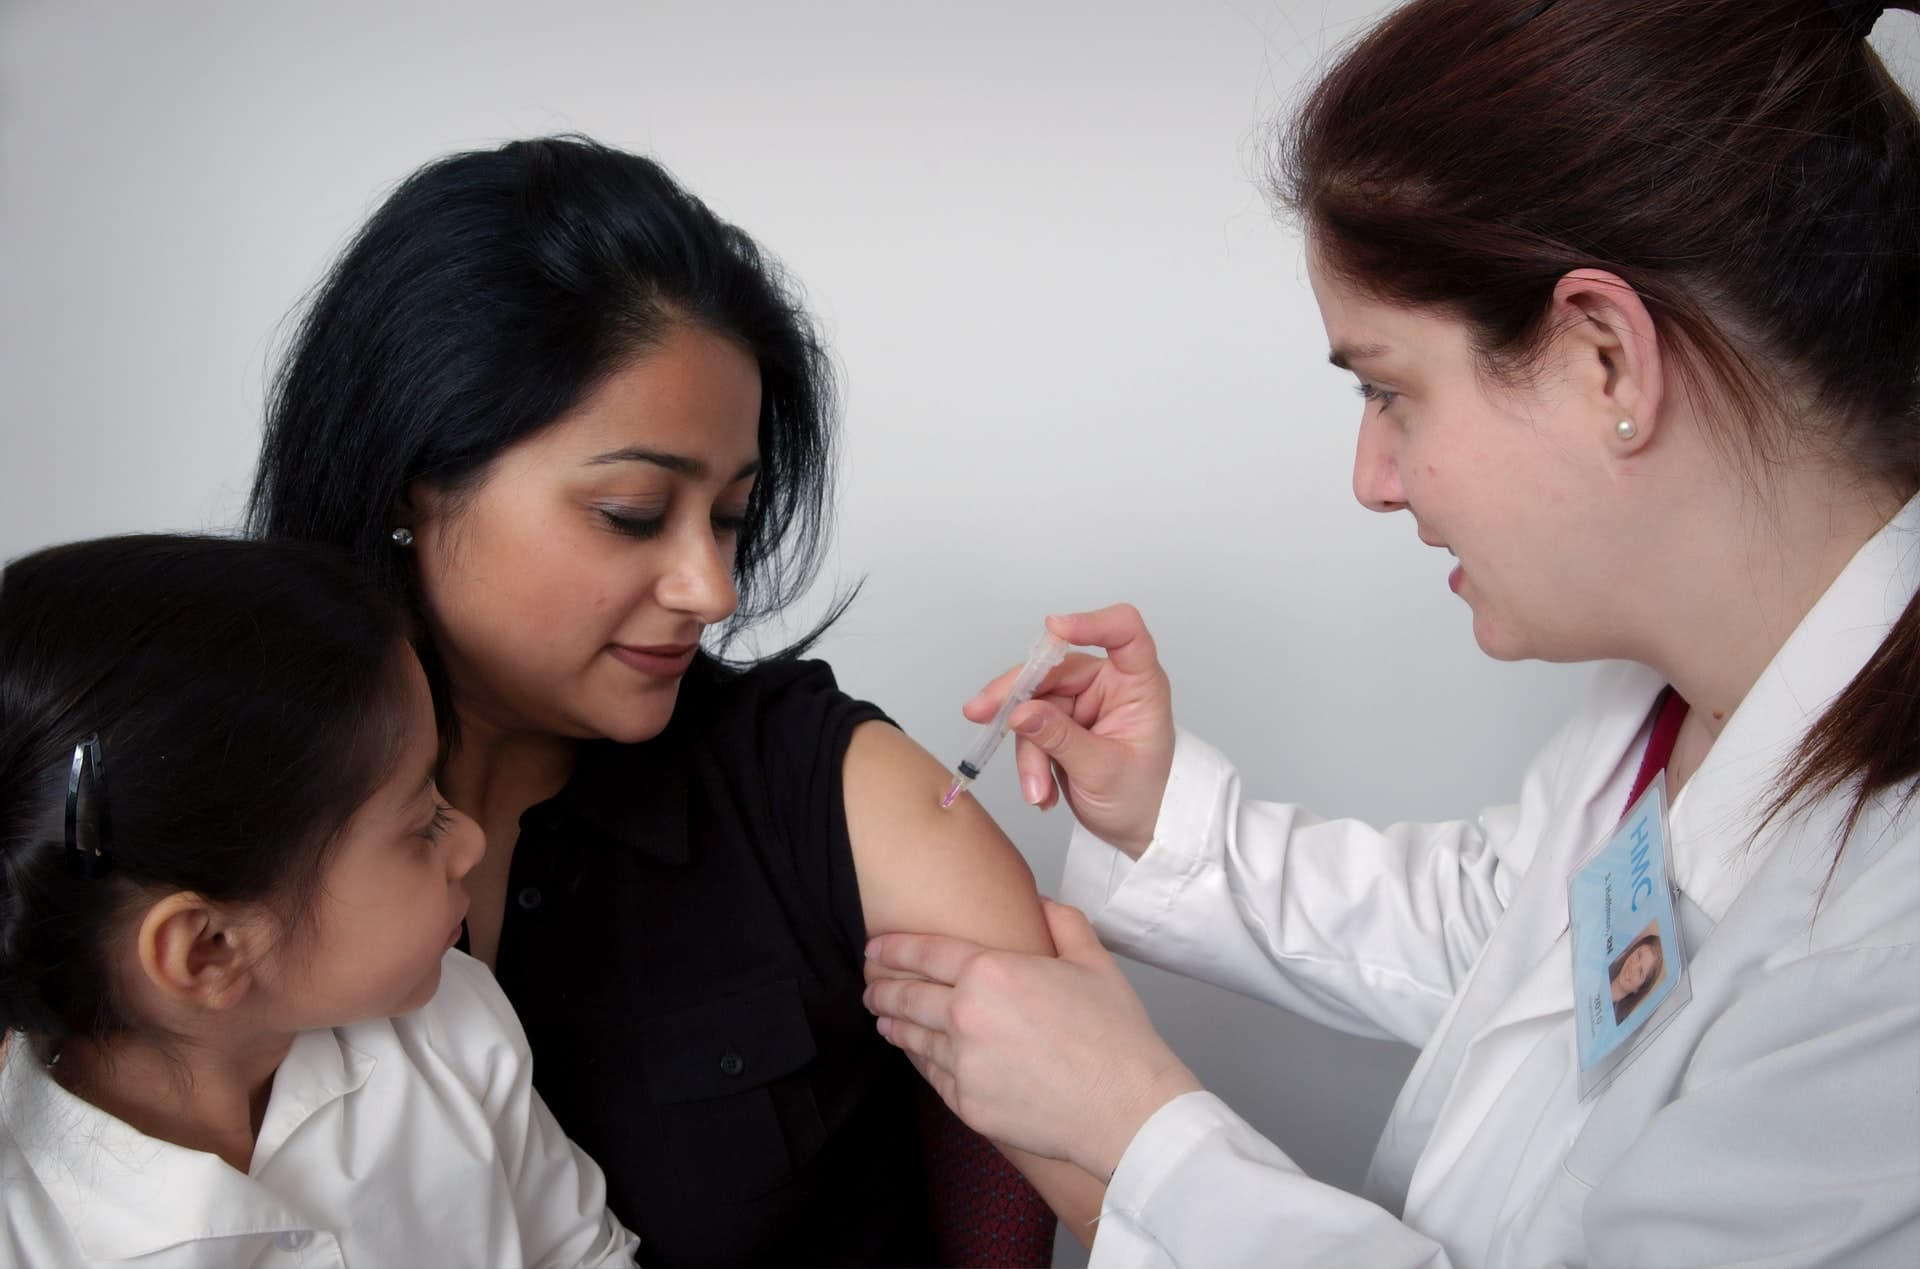 Practio vinder private vaccinationscentre i Region Sjælland